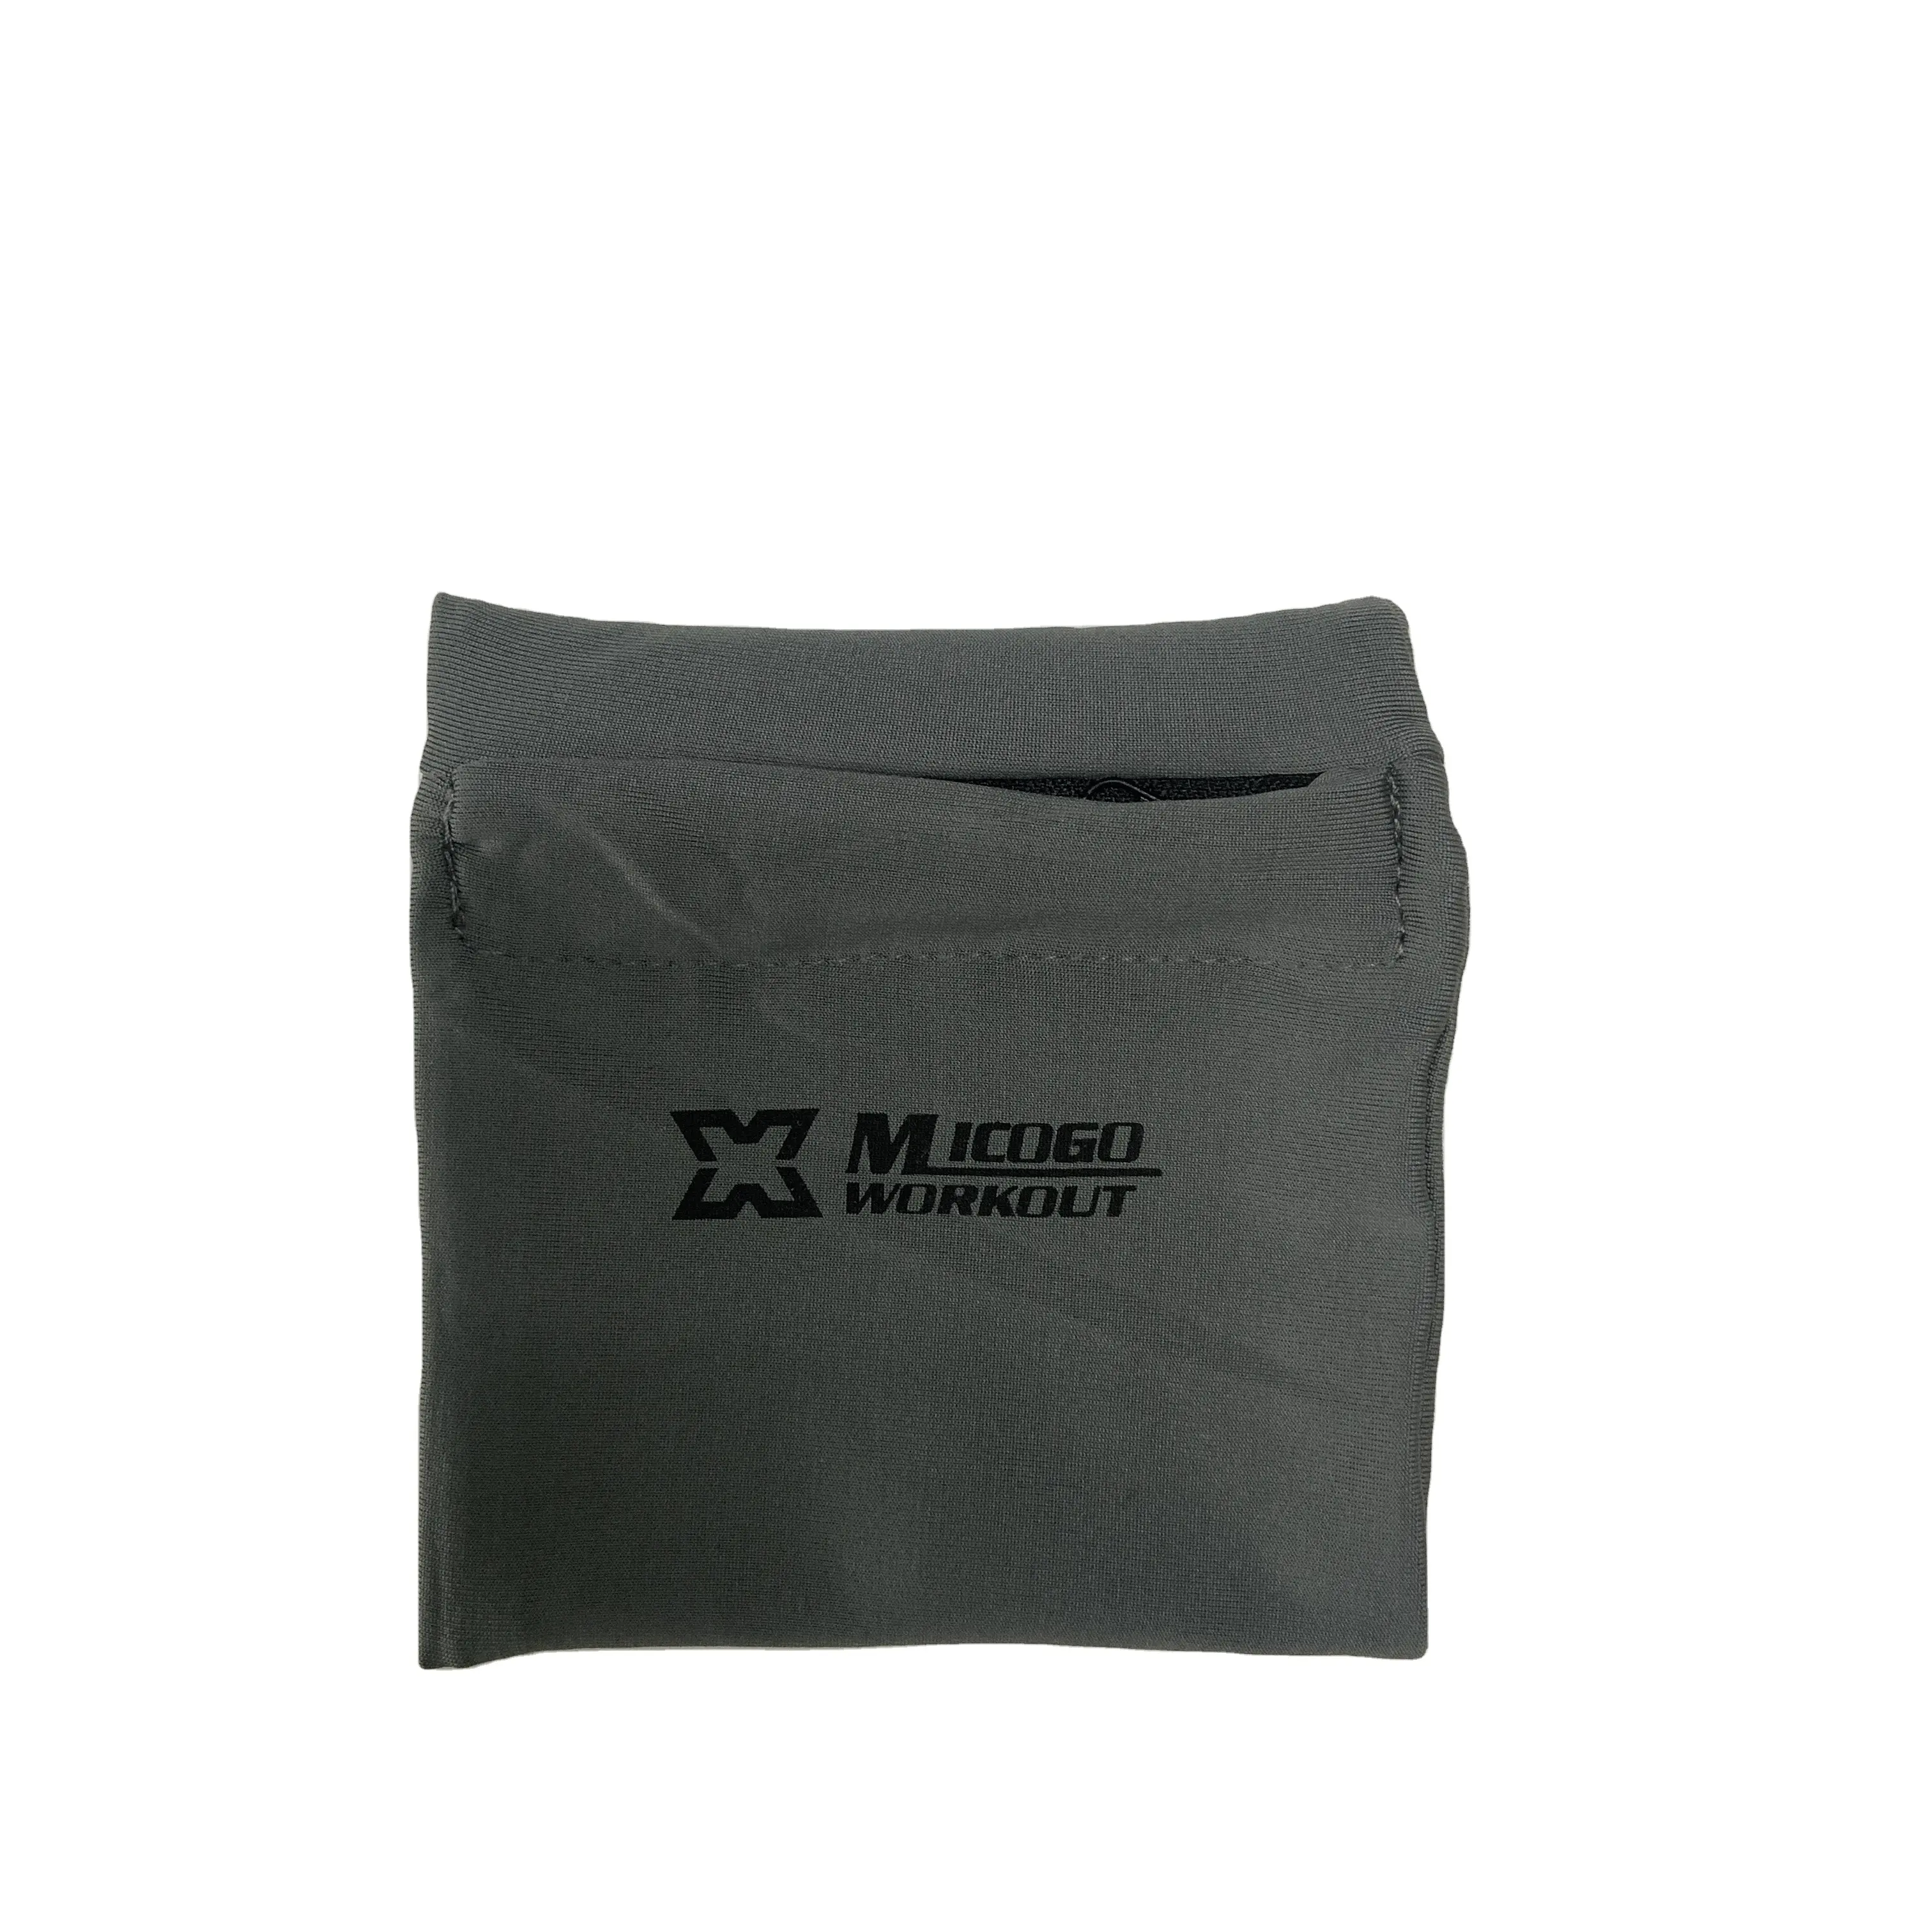 Newest promotional micro-fiber cotton sweatband with zipper pocket Sports Usage And Custom Wrist Band Sweatband